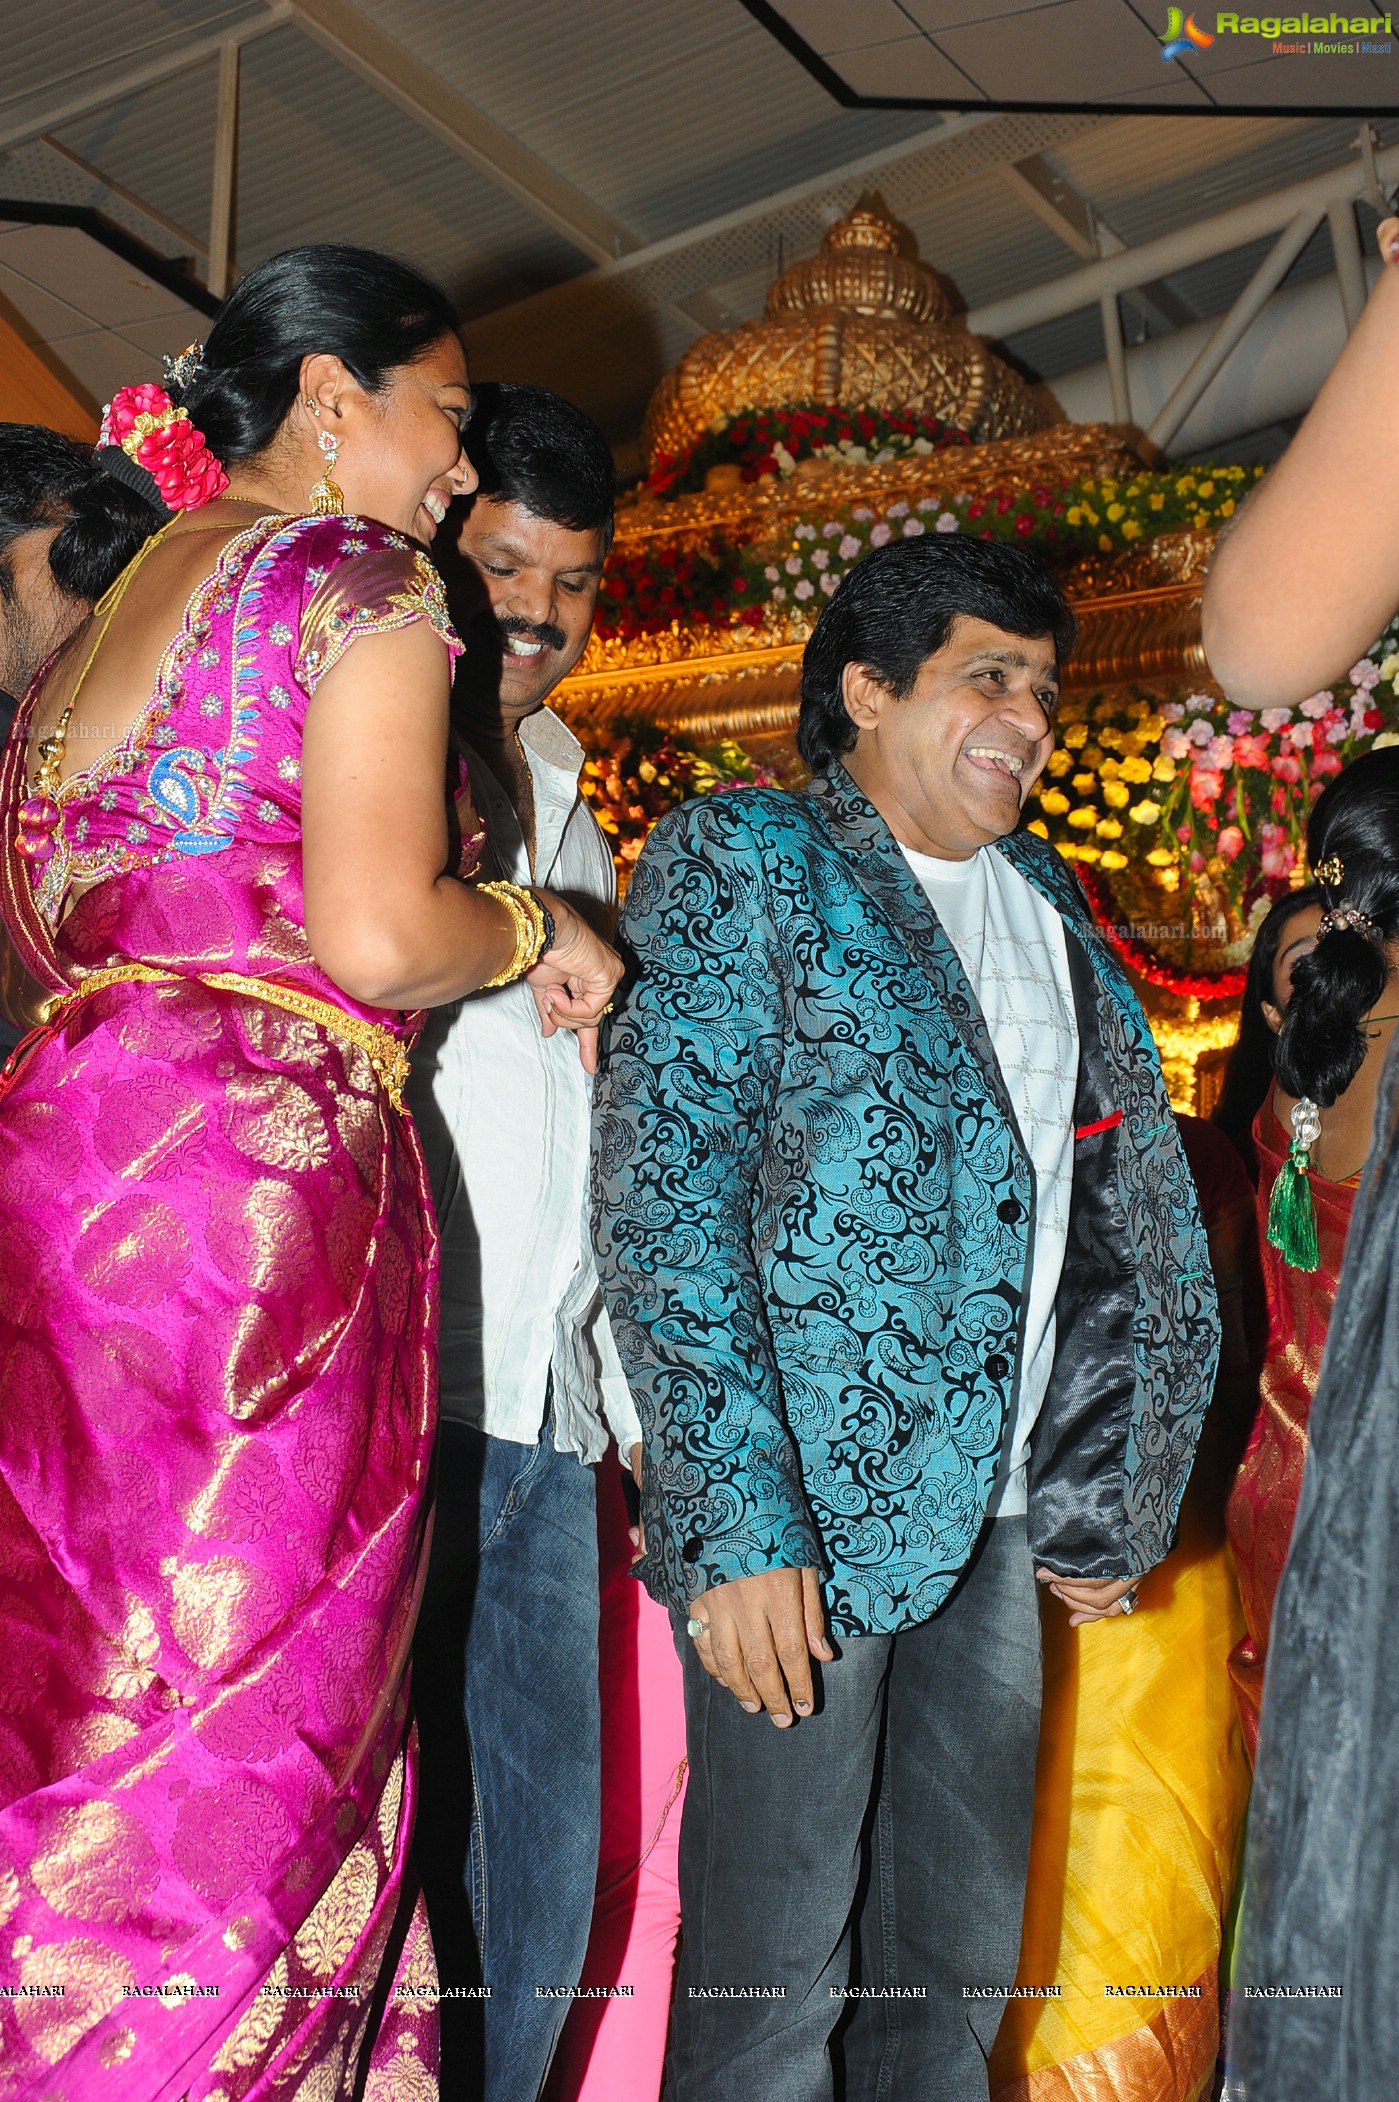 Raja Ravindra's Daughter Wedding